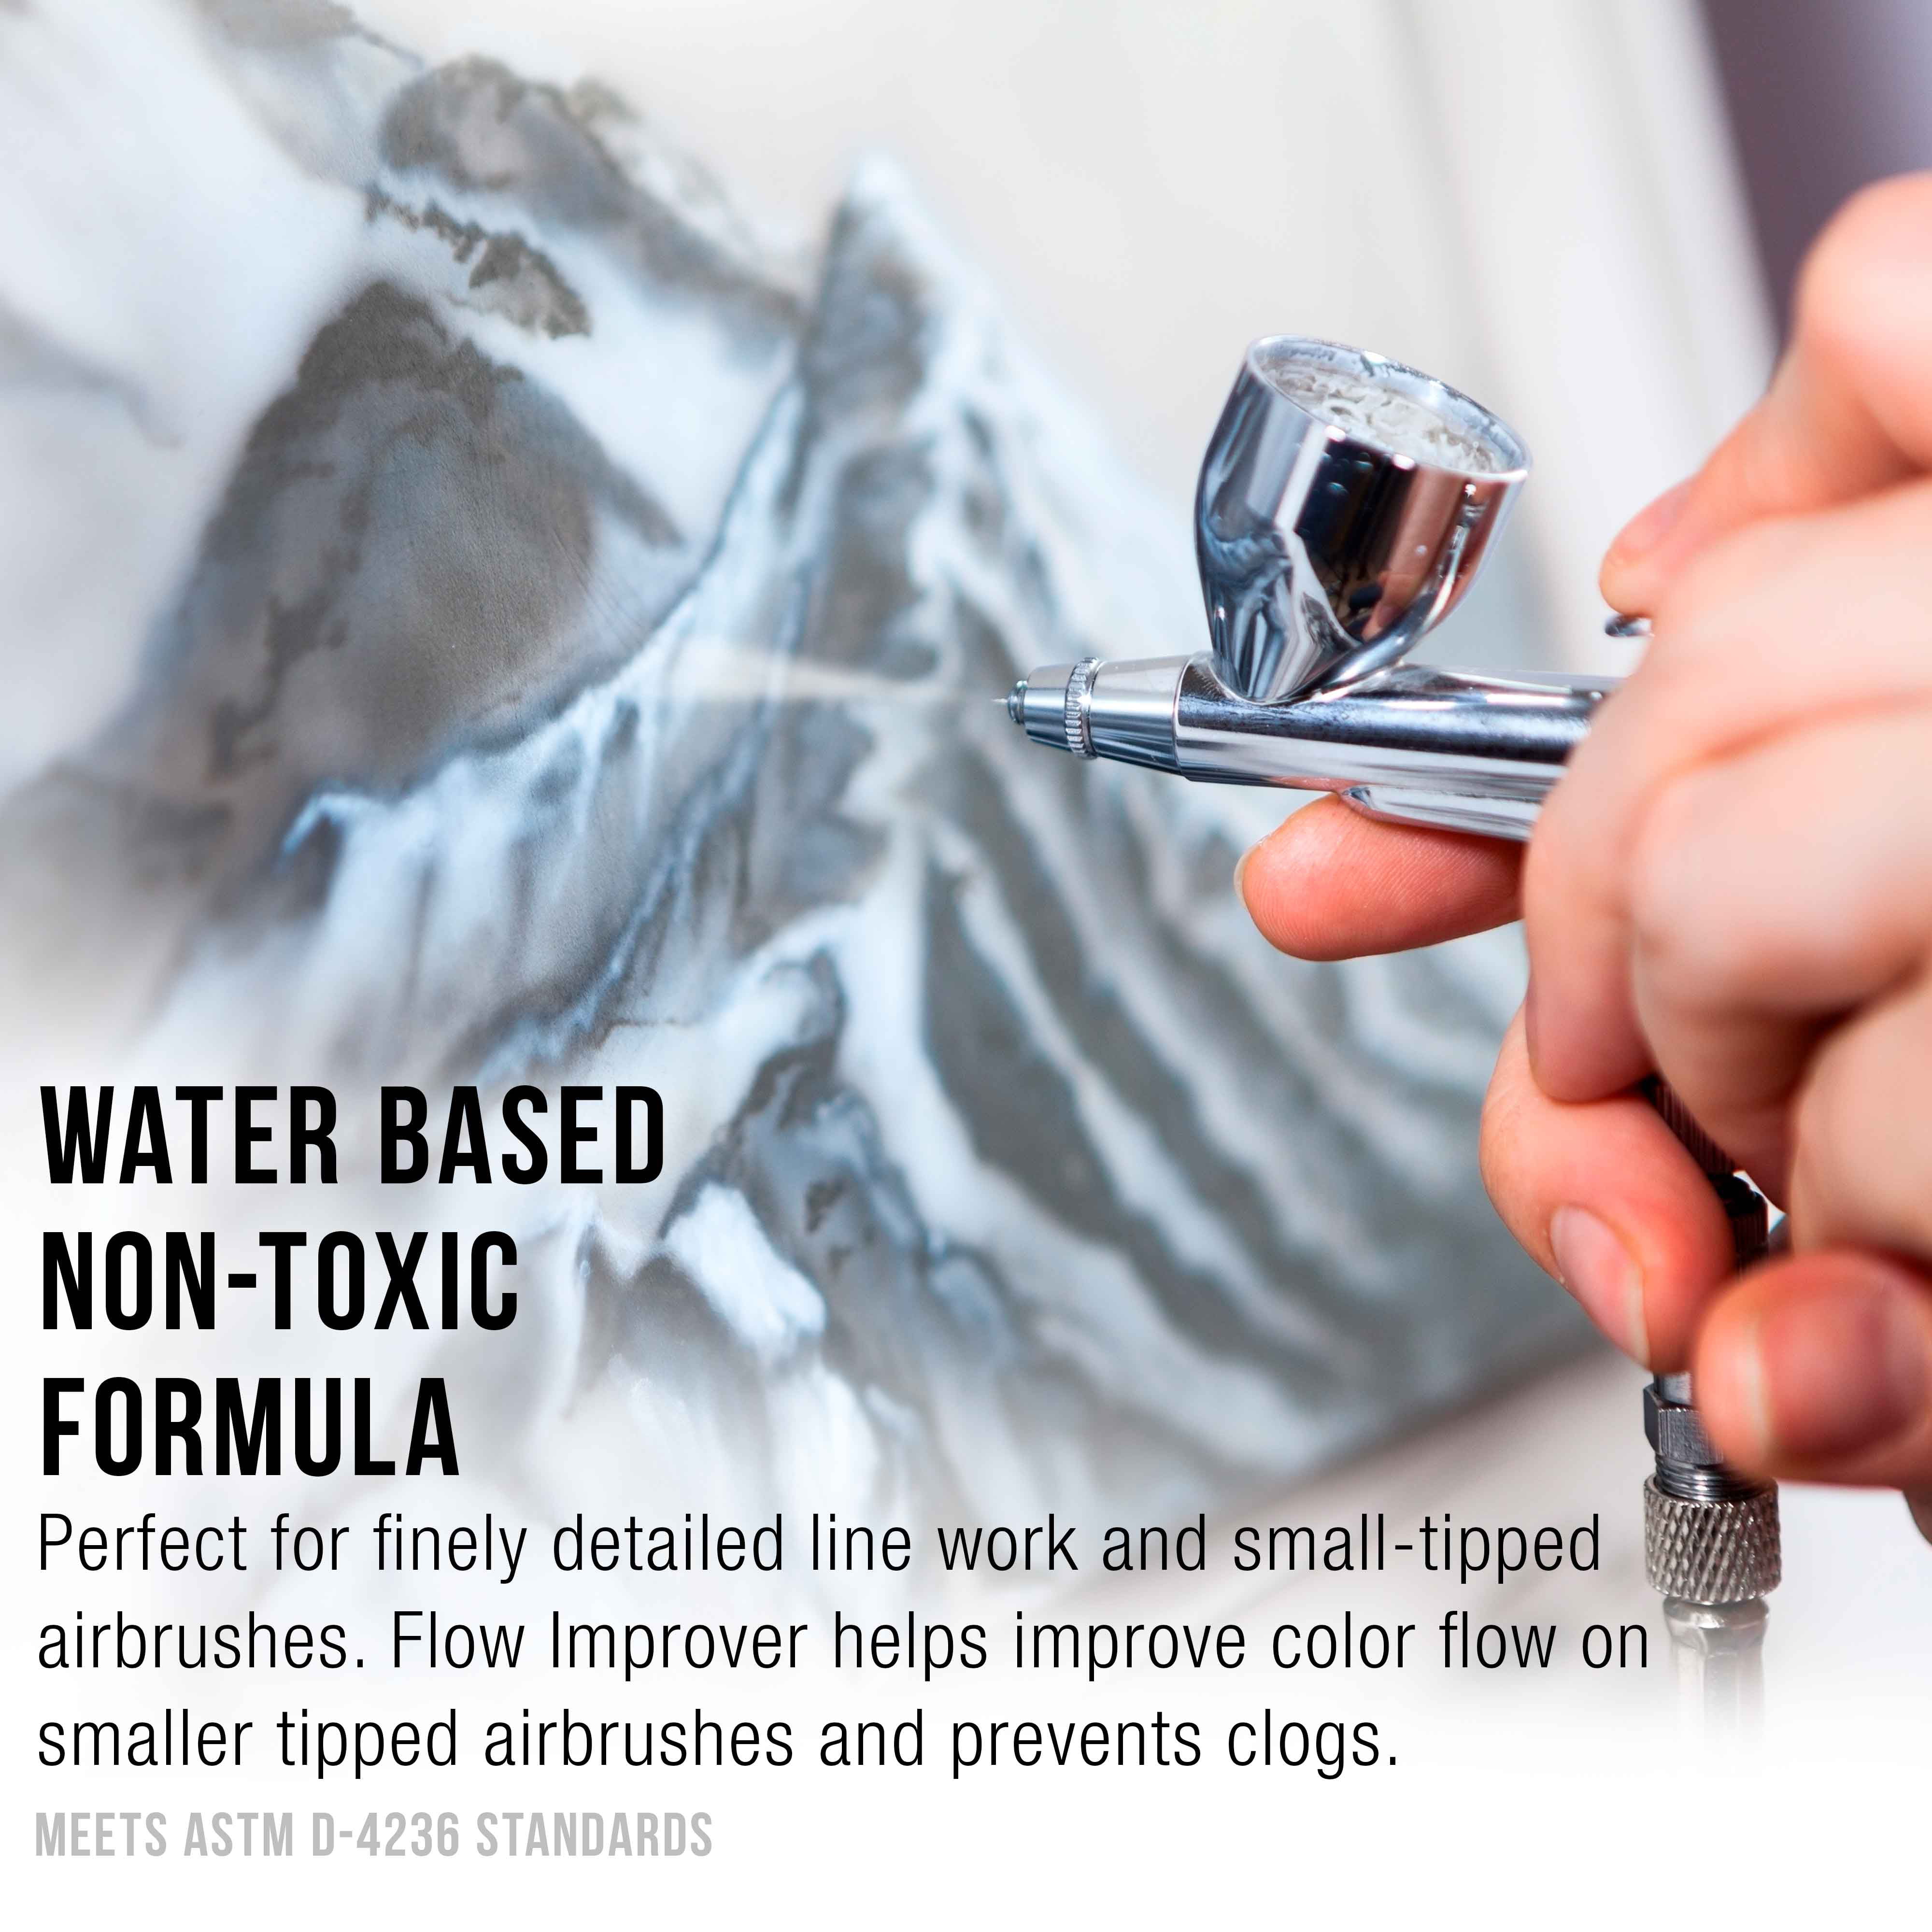 Airbrush Flow Improver Paint Set 8oz (250 ml) Reduce Clogs & Dry Needle  Tips – Impresa Products